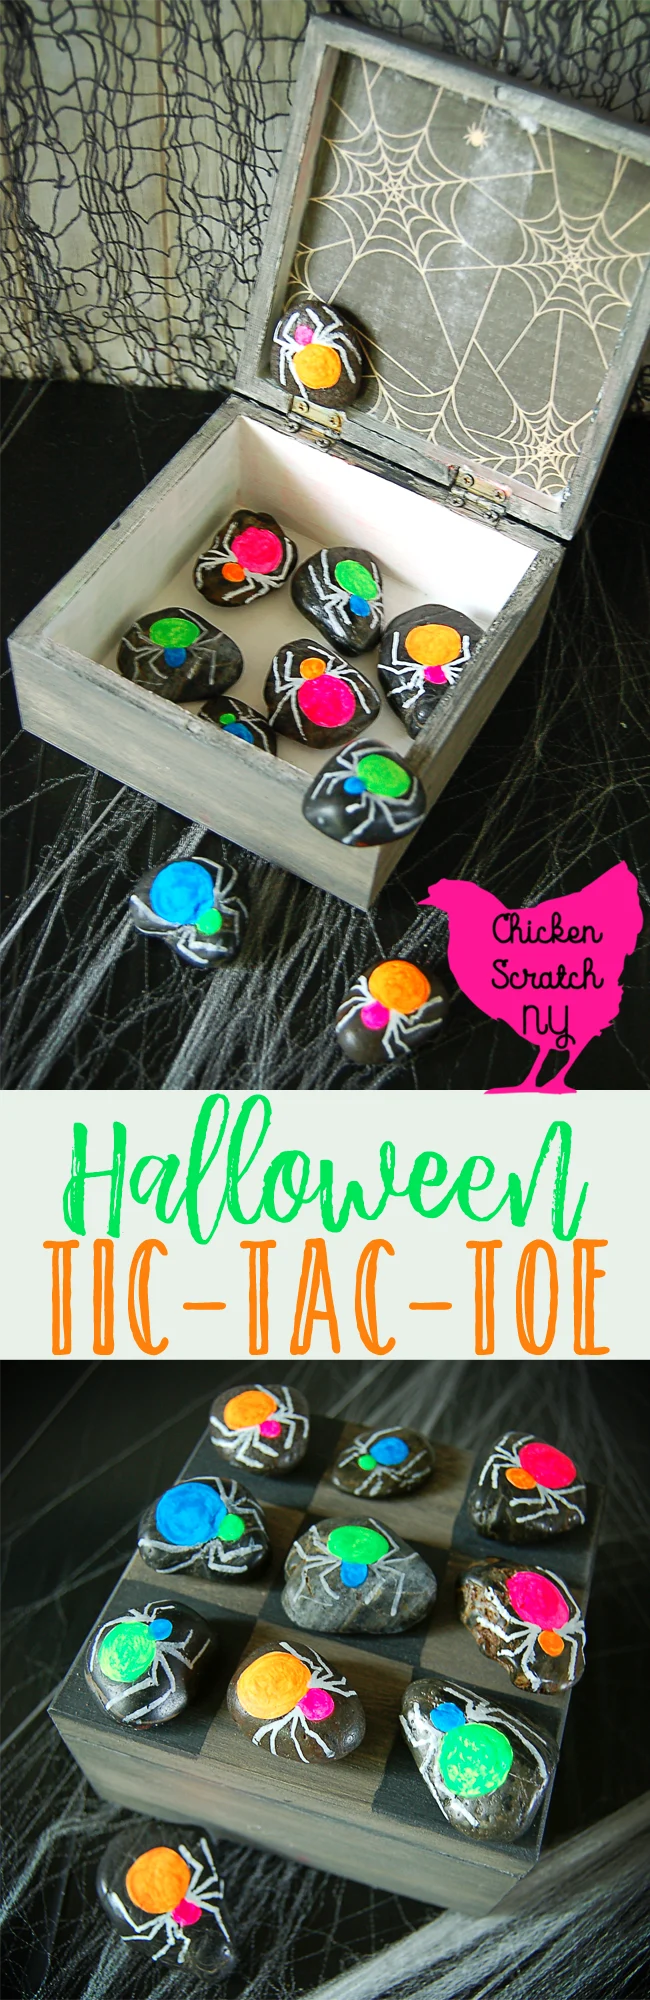 Halloween Tic Tac Toe, Halloween game, Halloween Kids, Halloween DIY, Halloween Spider